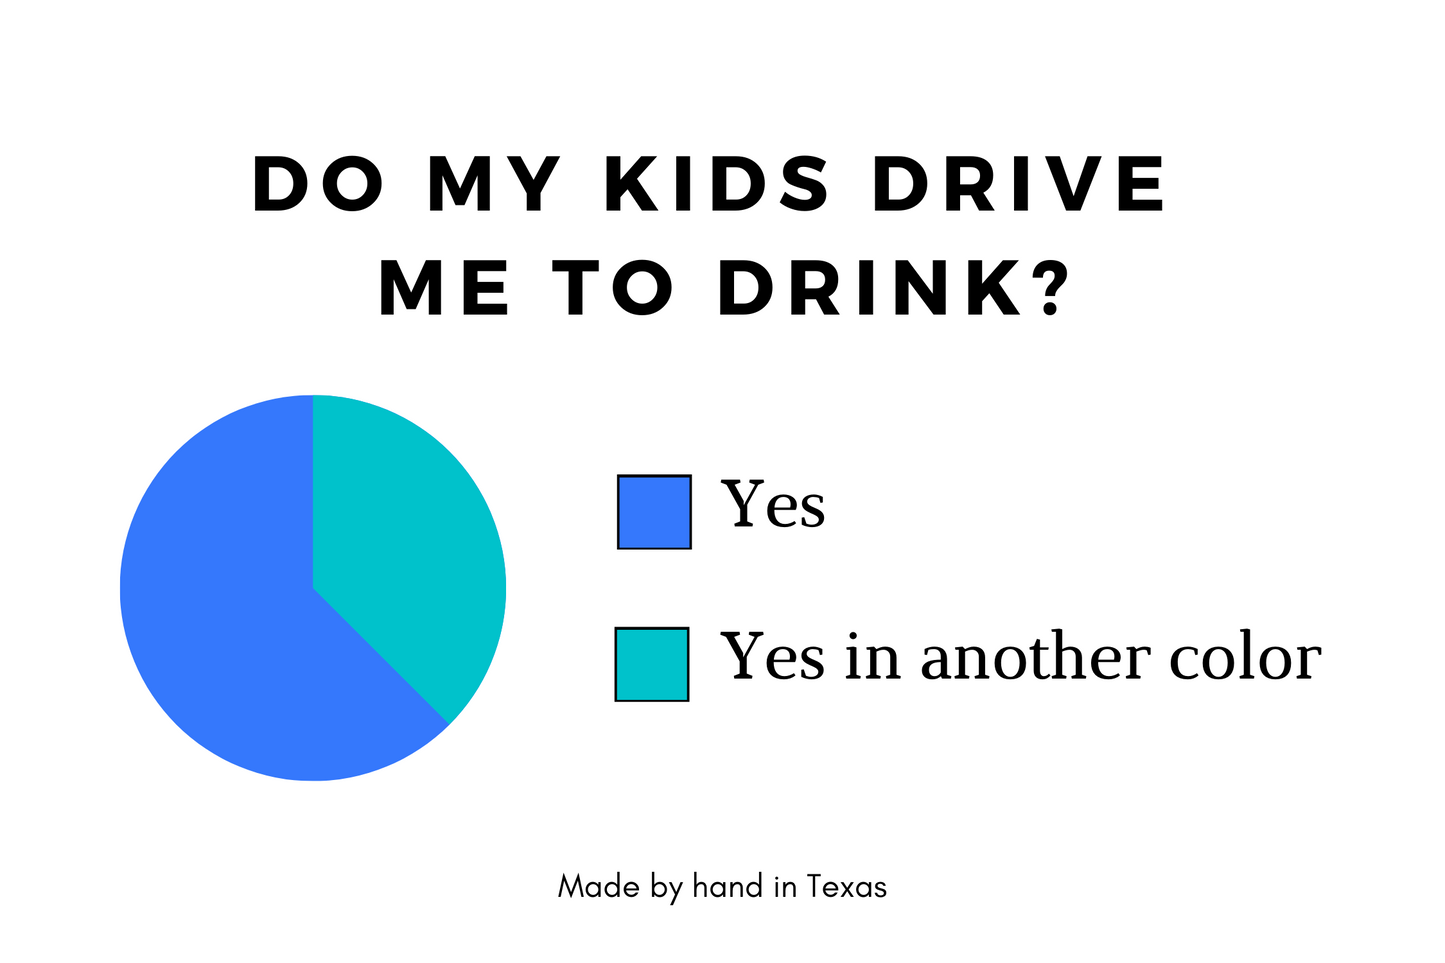 Do my kids drive me to drink?